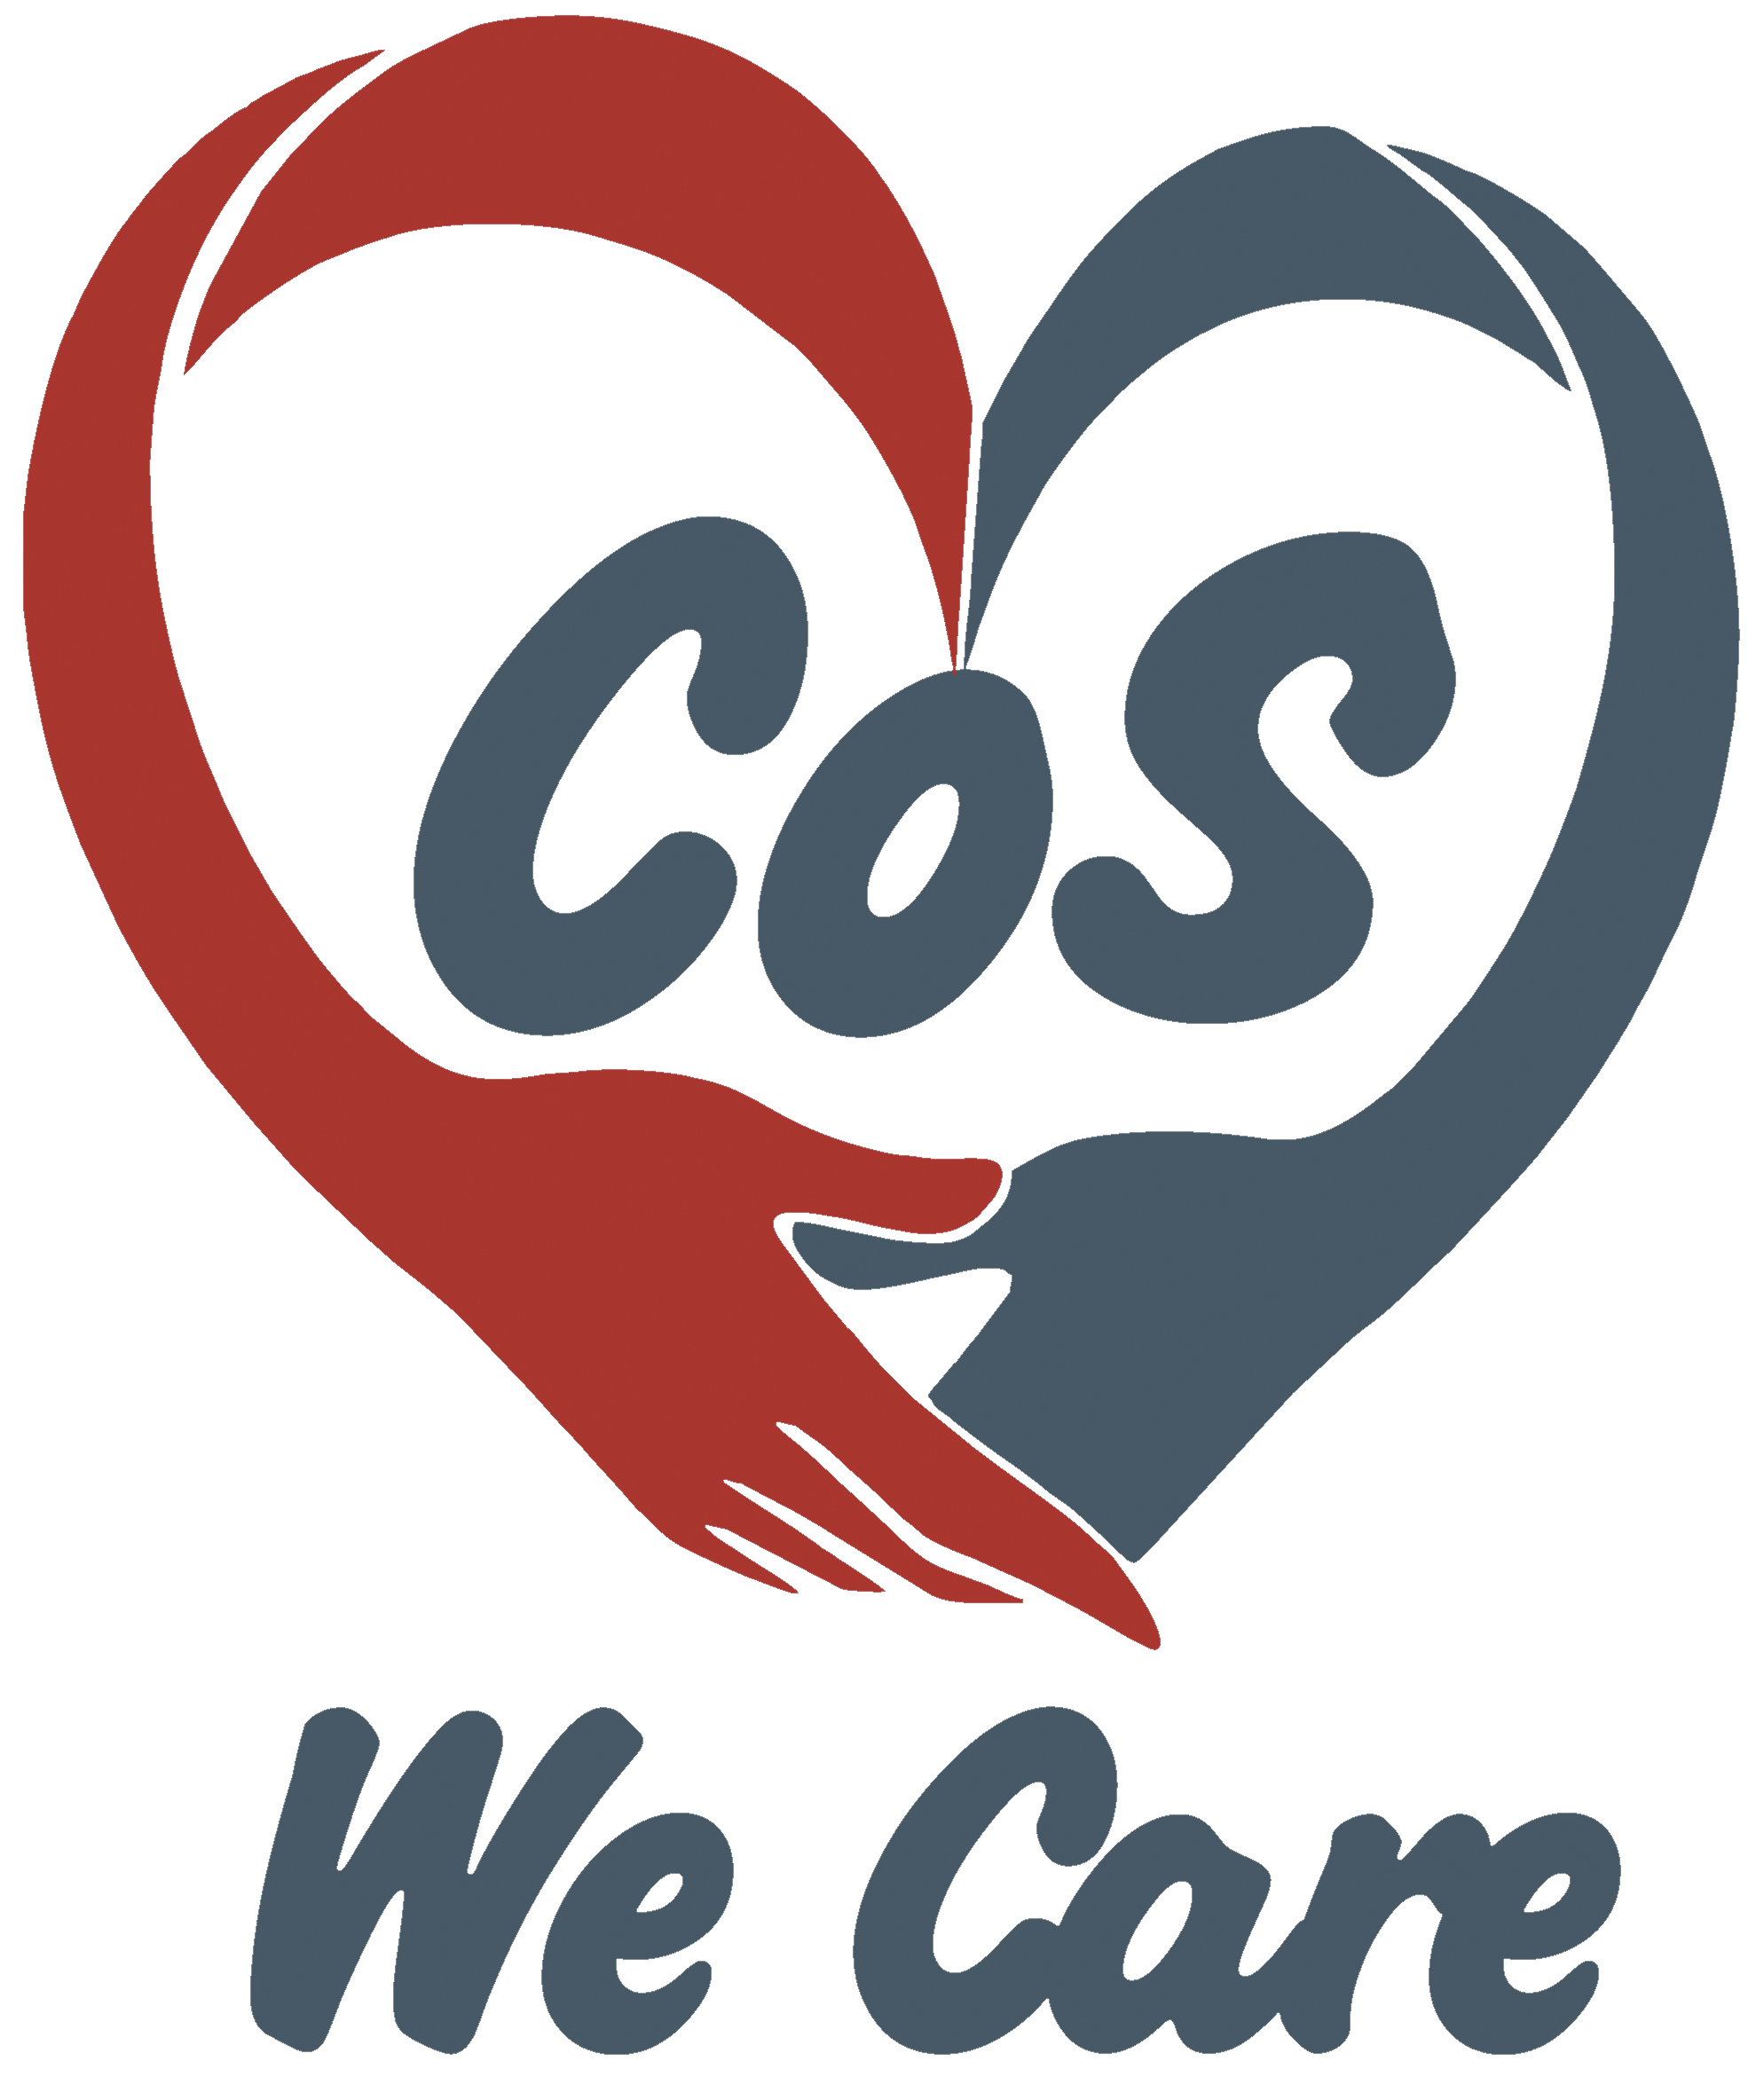 COS-logo PNG Transparant Beeld